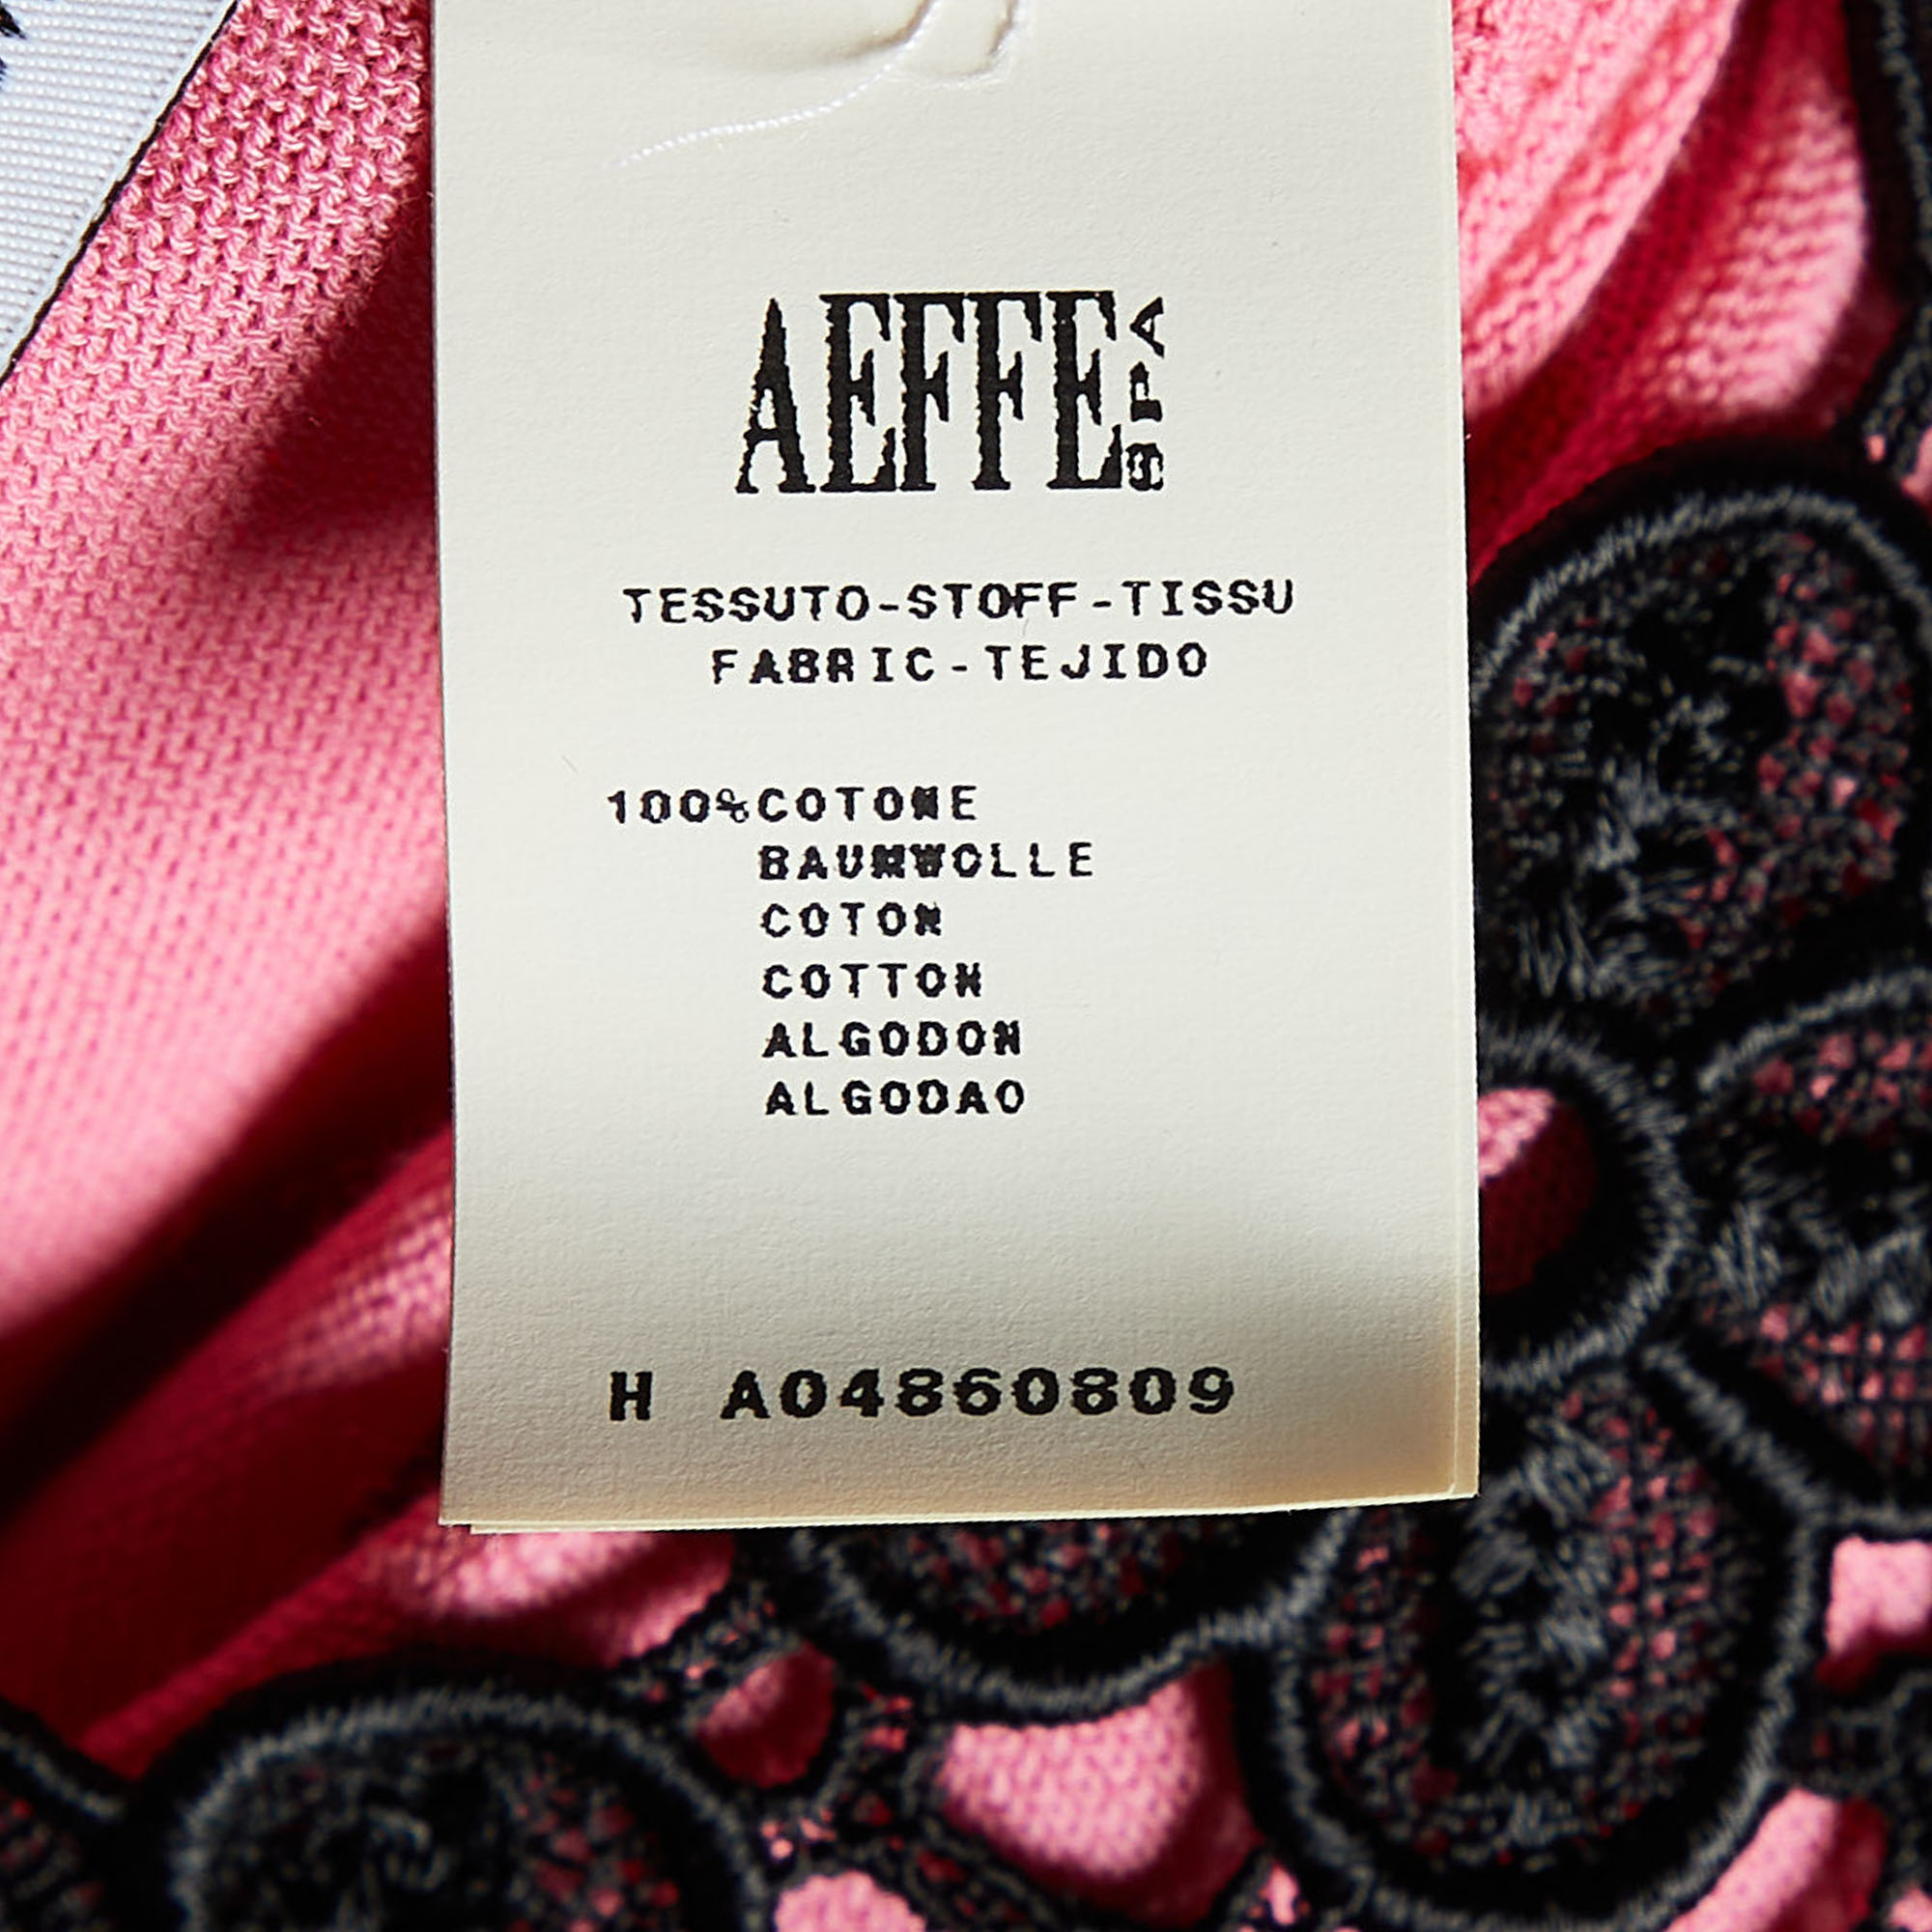 Moschino Cheap And Chic Pink Cotton Knit Lace Trim Detail Mini Dress L